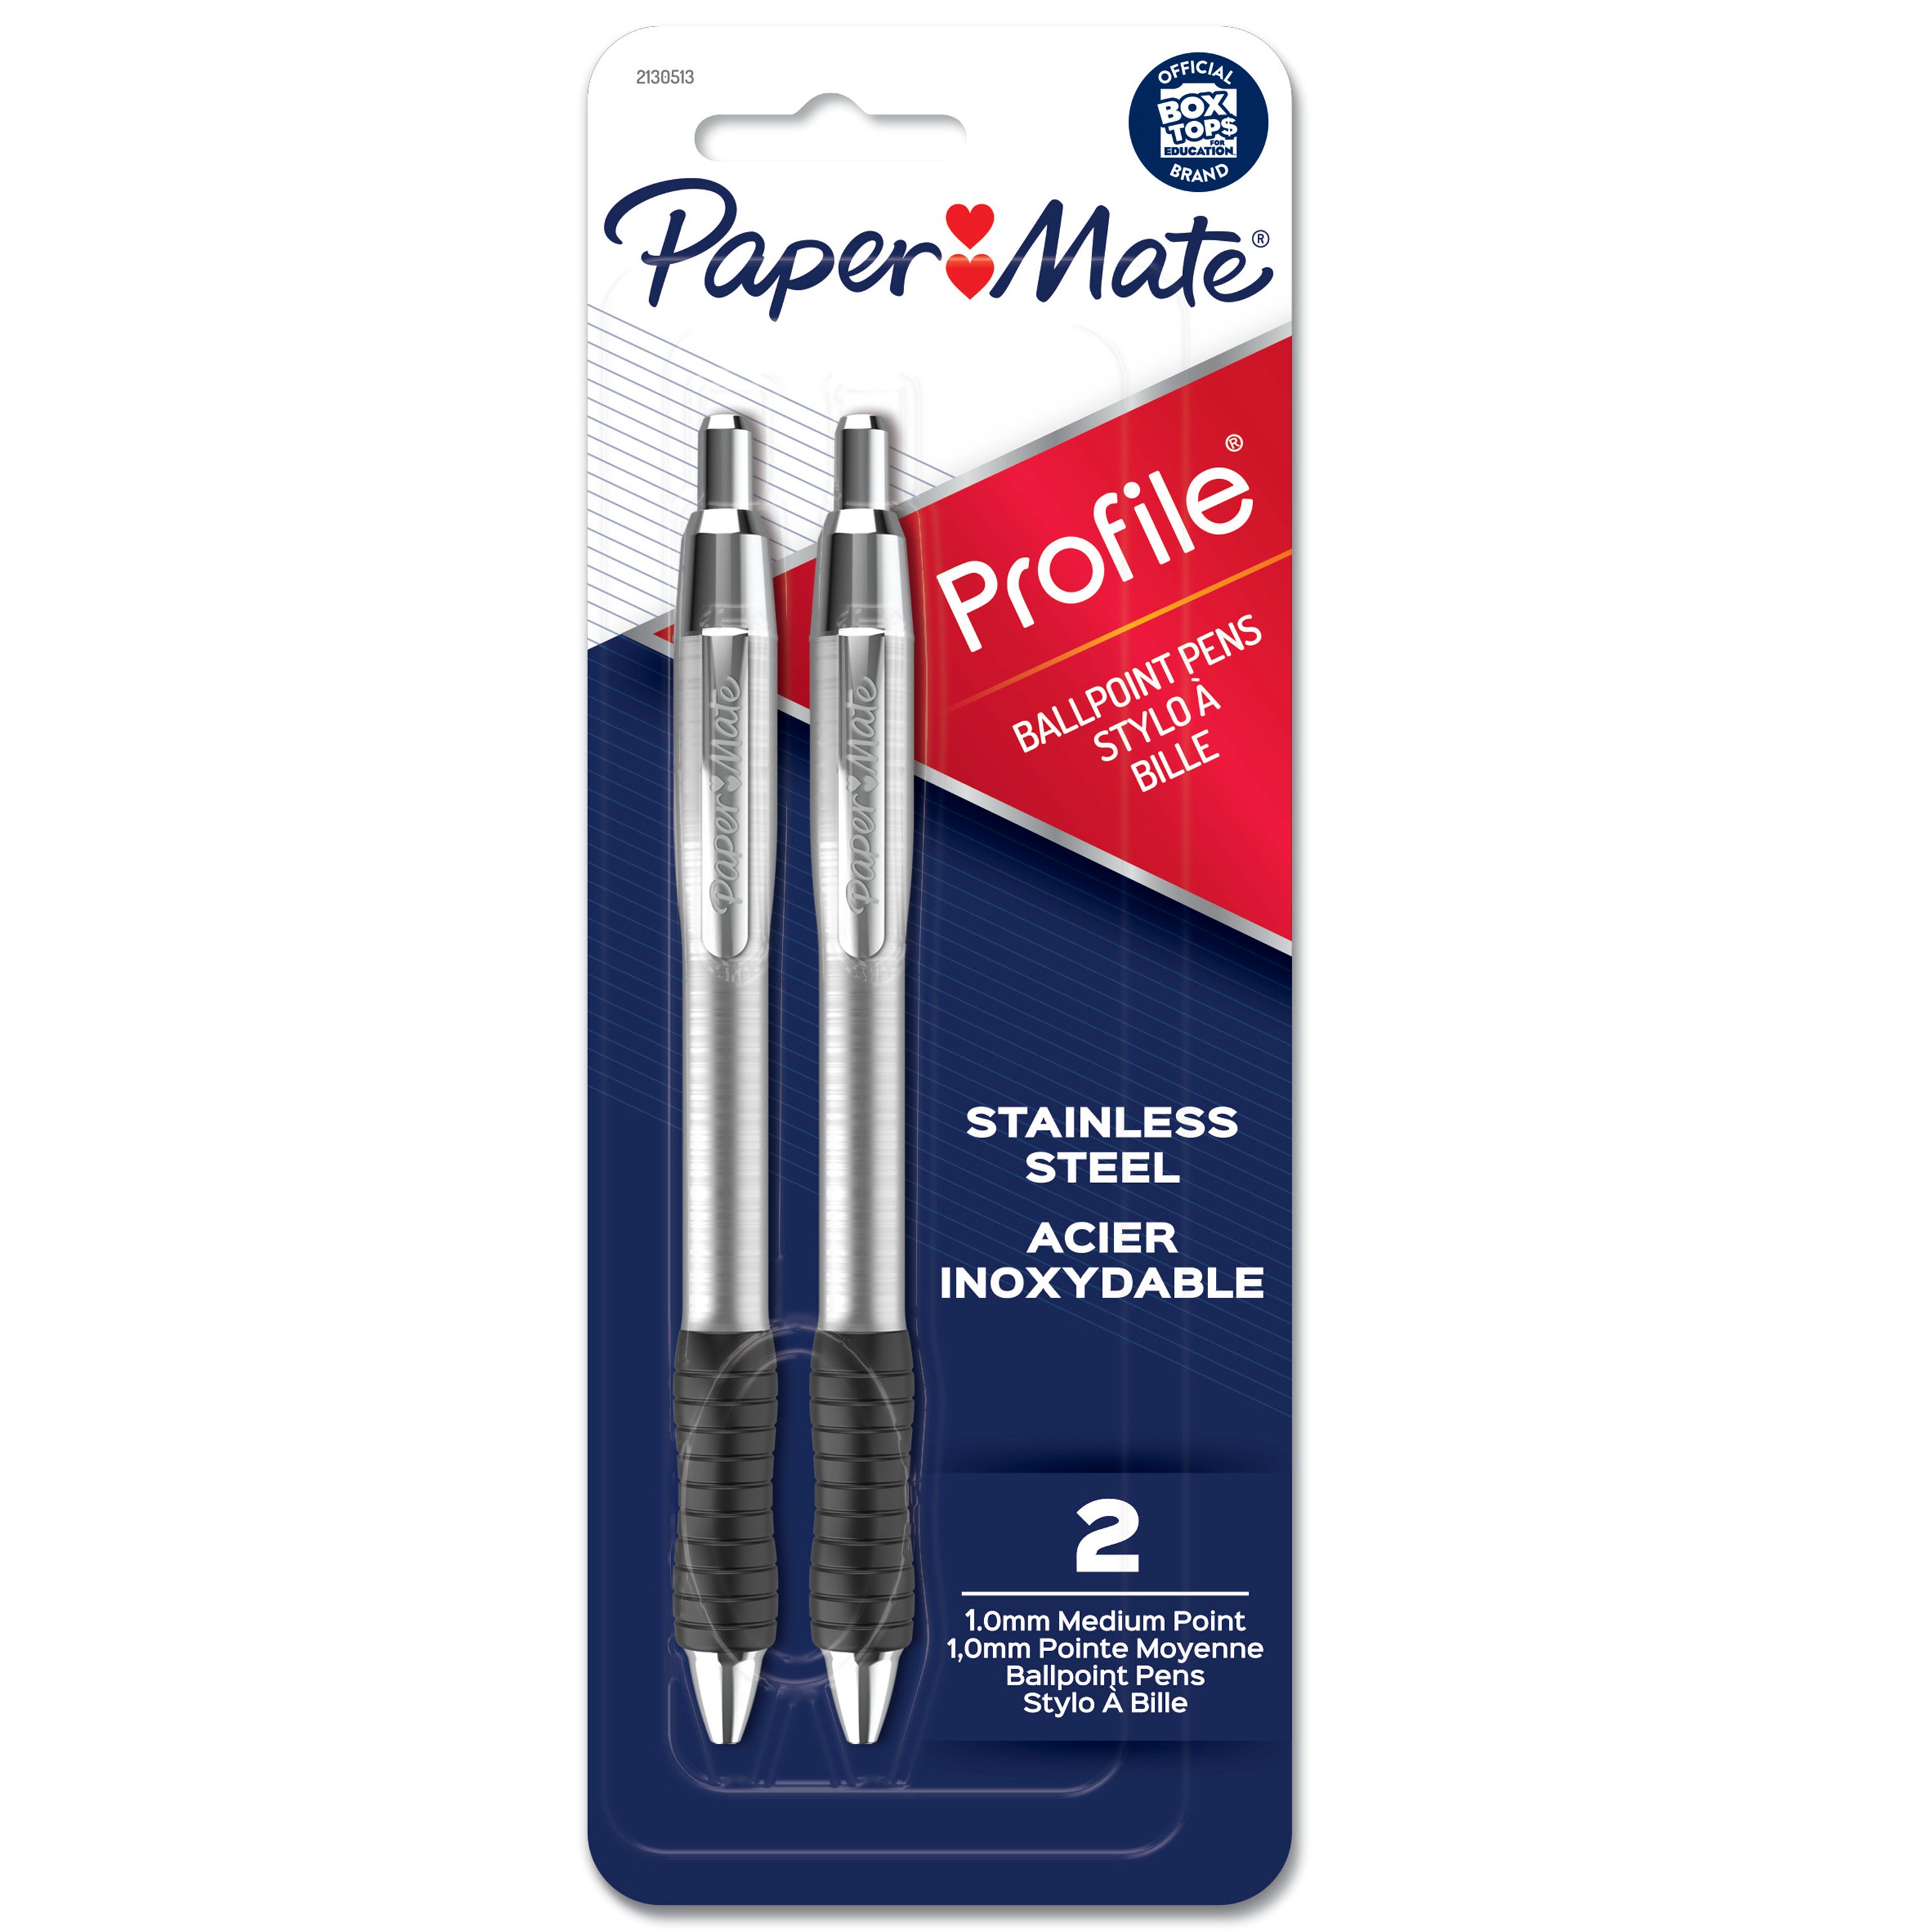 Paper Mate Fountain Pen Brushed Stainless Steel Fountain Pen Medium Nib